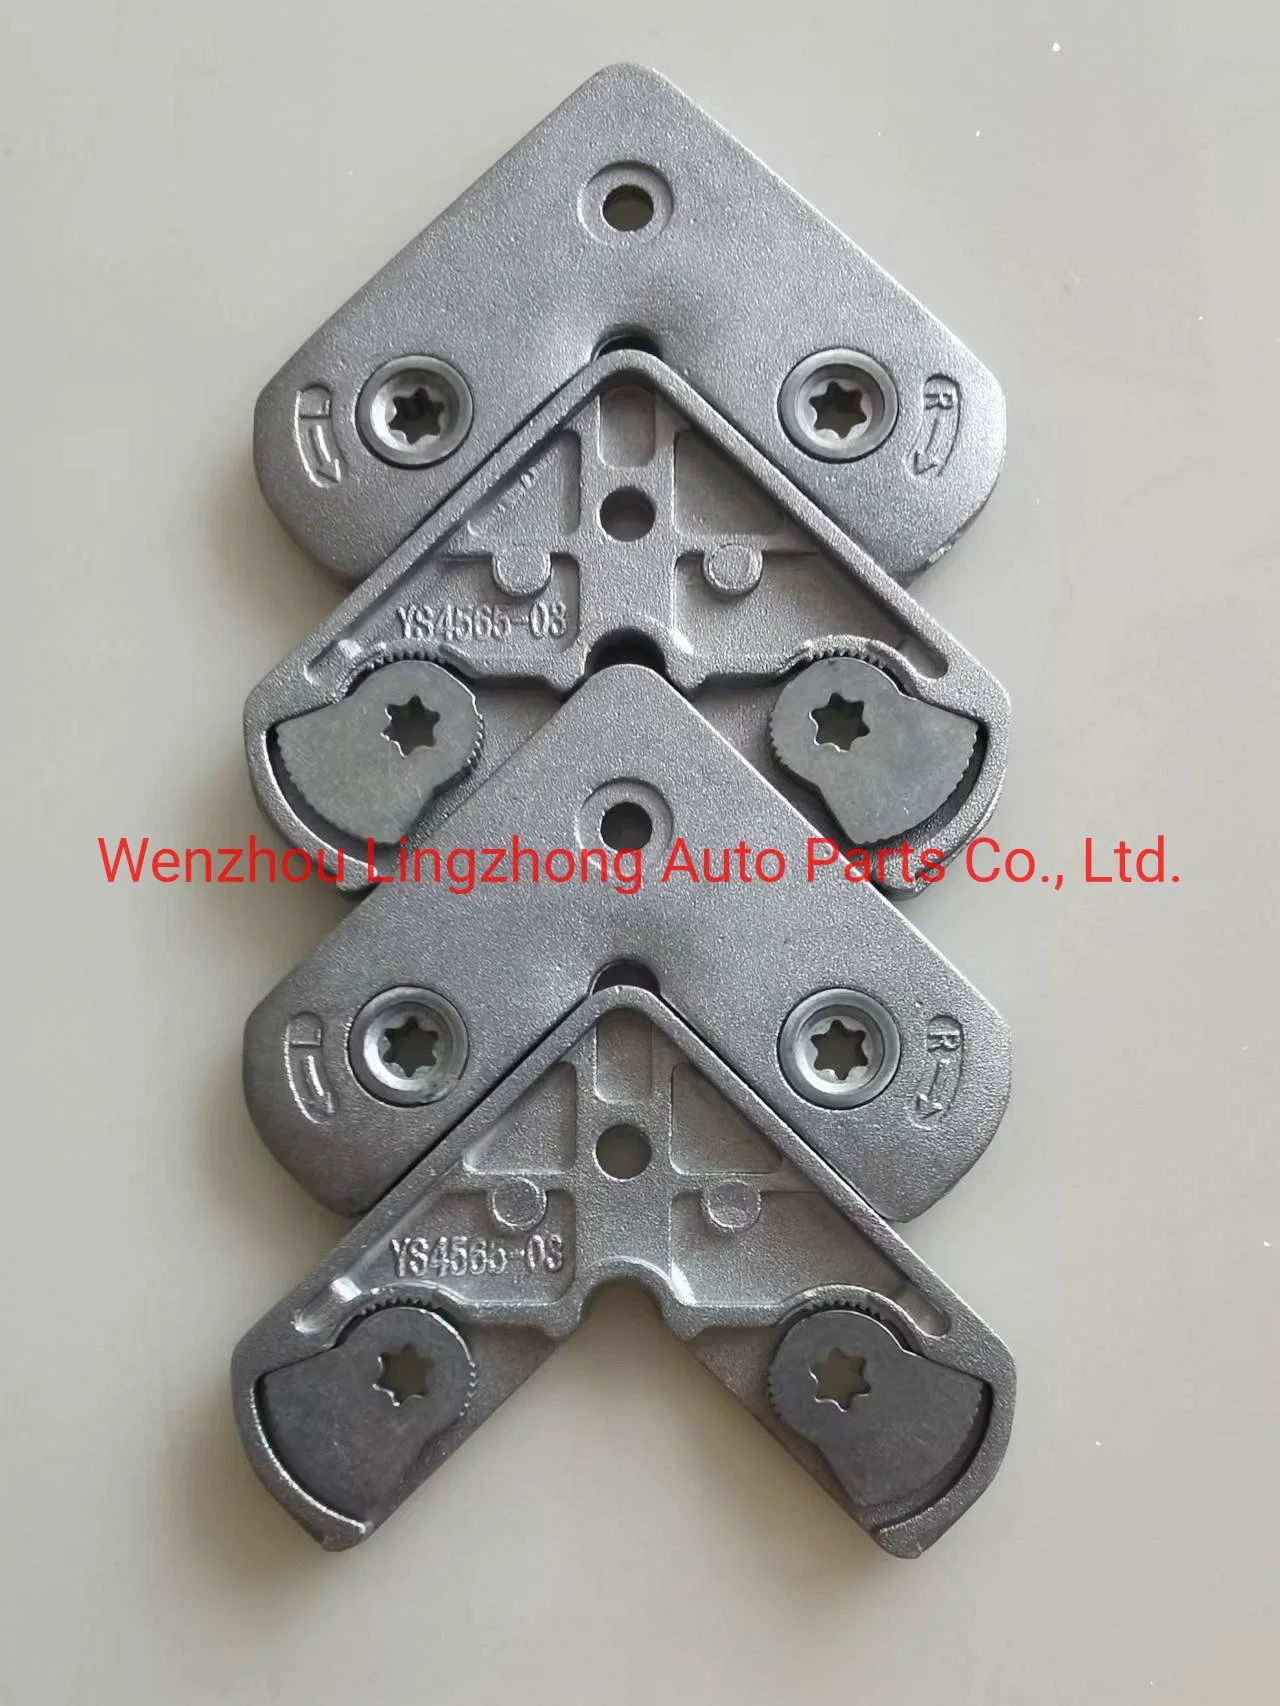 Aluminium Druckguss/Aluminiumlegierung Guss/Zinklegierung Guss//Metallguss Teile/ Fenster Gussteile/Winkelcode/Aluminium-Druckguss